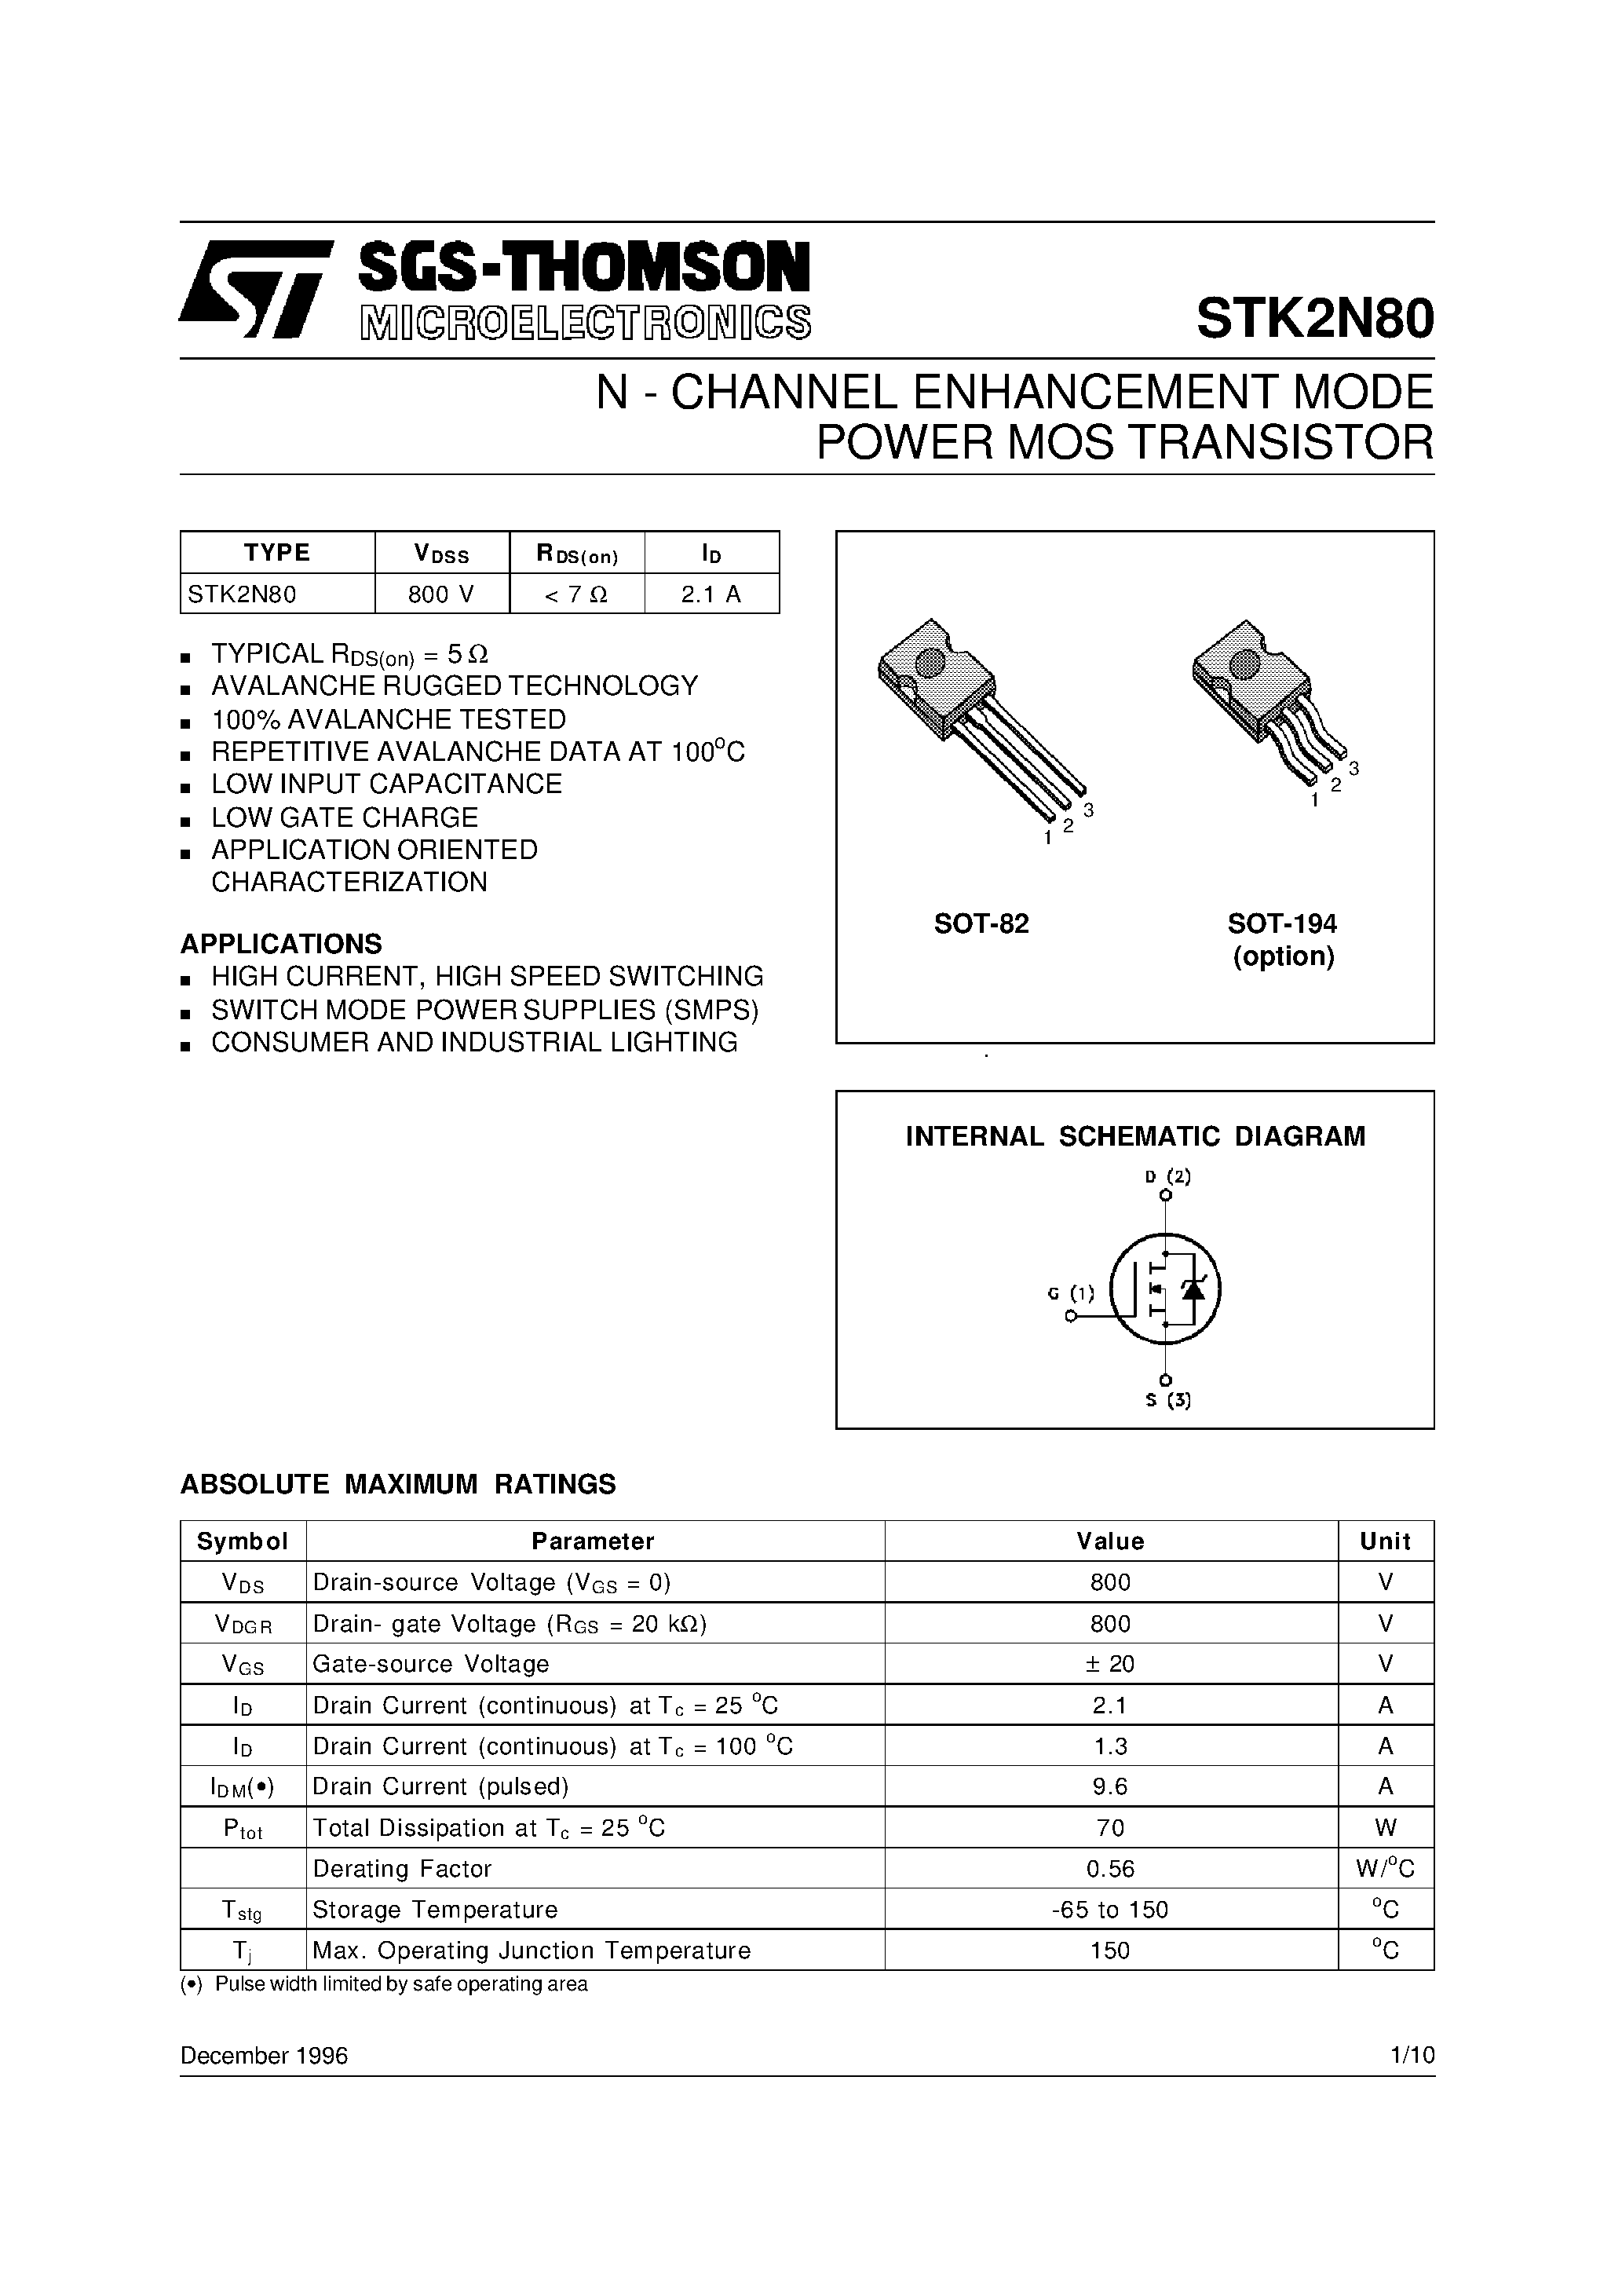 Datasheet STK2N80 - N - CHANNEL ENHANCEMENT MODE POWER MOS TRANSISTOR page 1